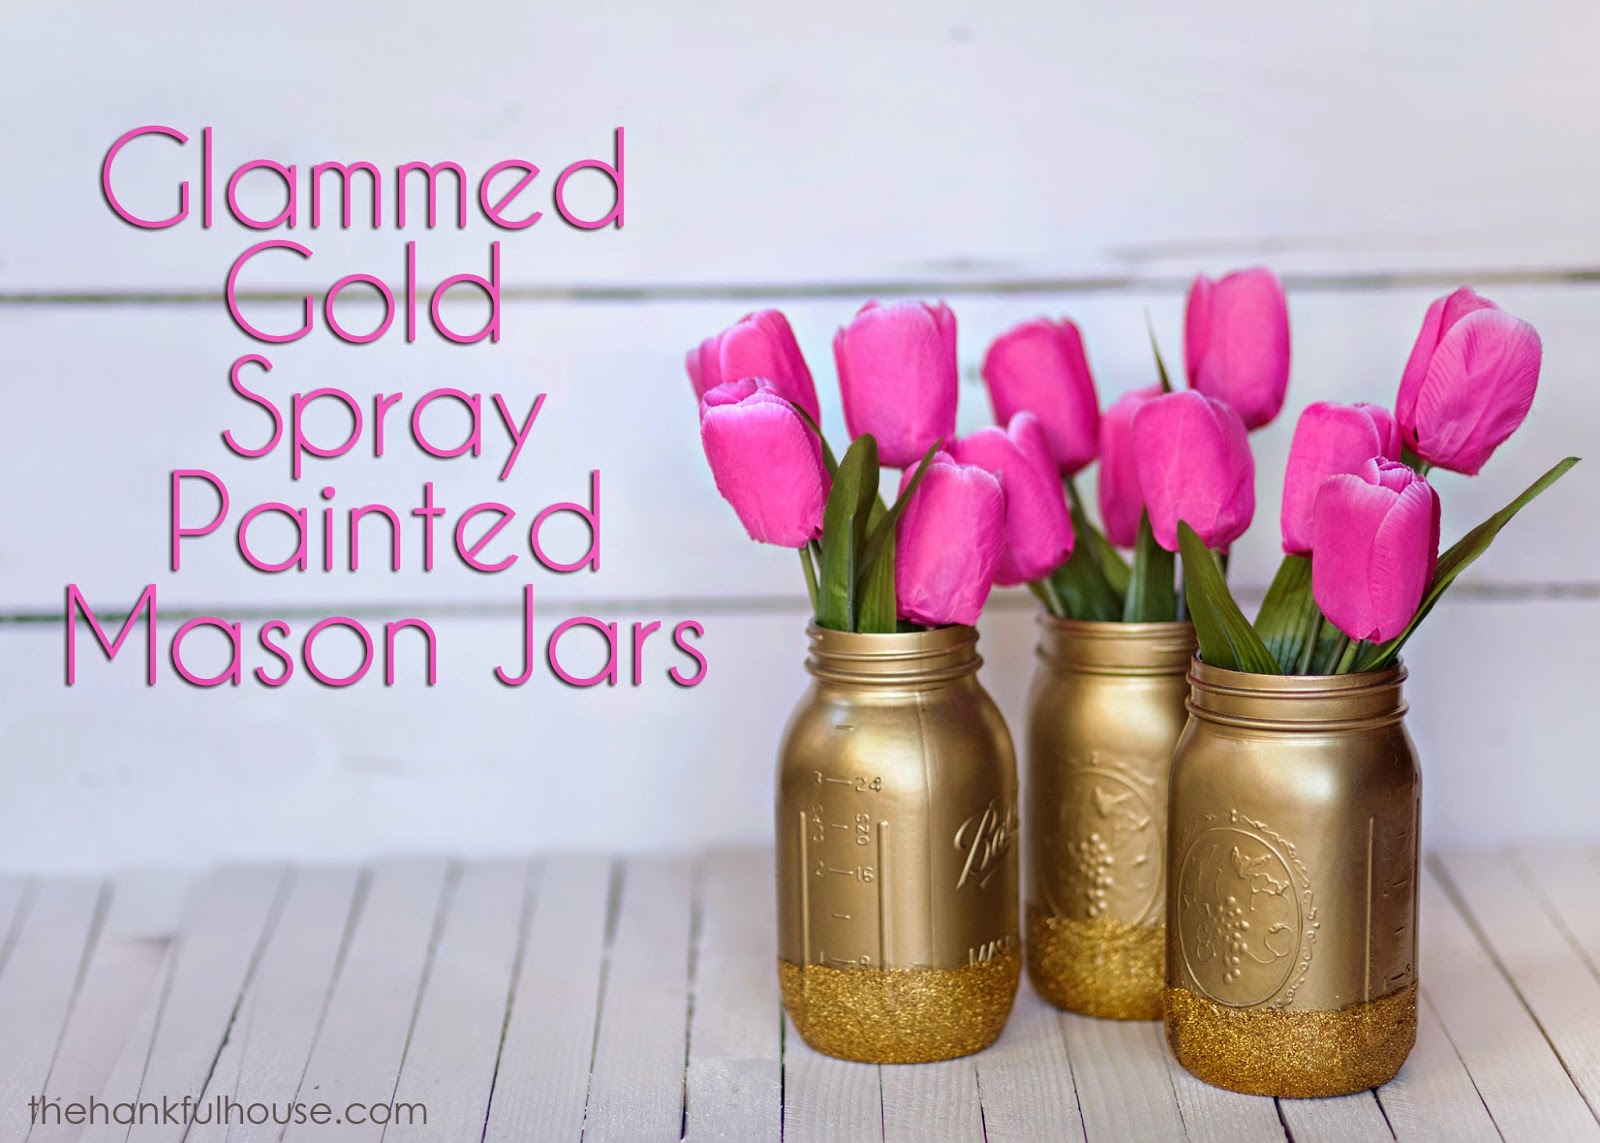 Glammed Gold Spray Painted Mason Jars